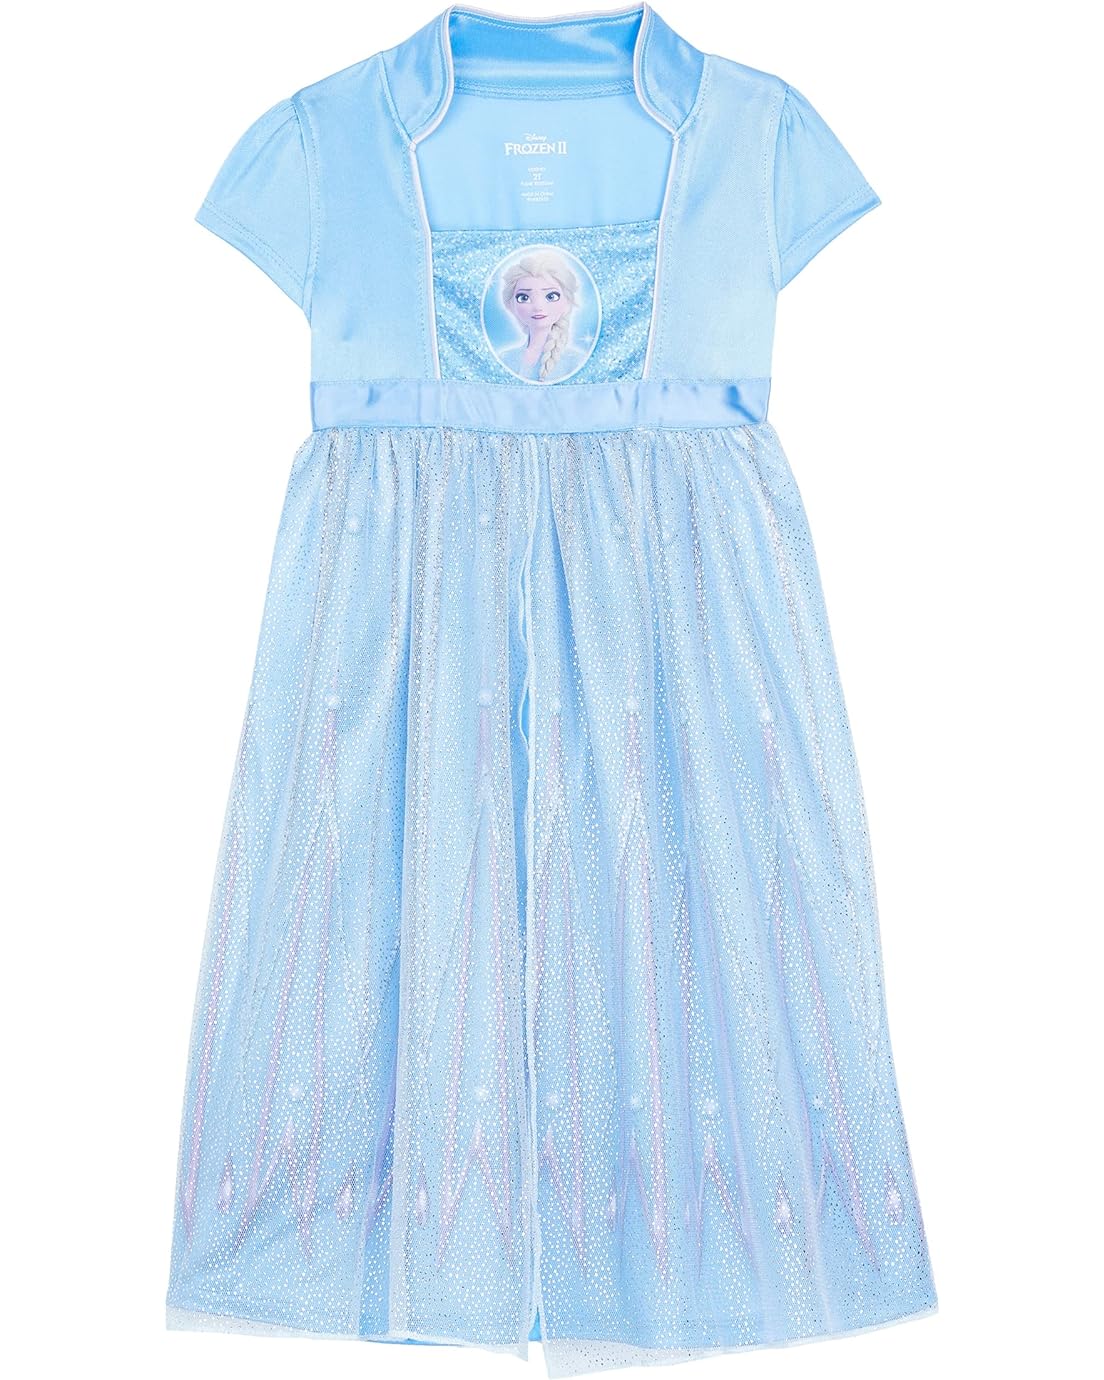 Favorite Characters Frozen 2 Elsa Fantasy Gown (Toddler)